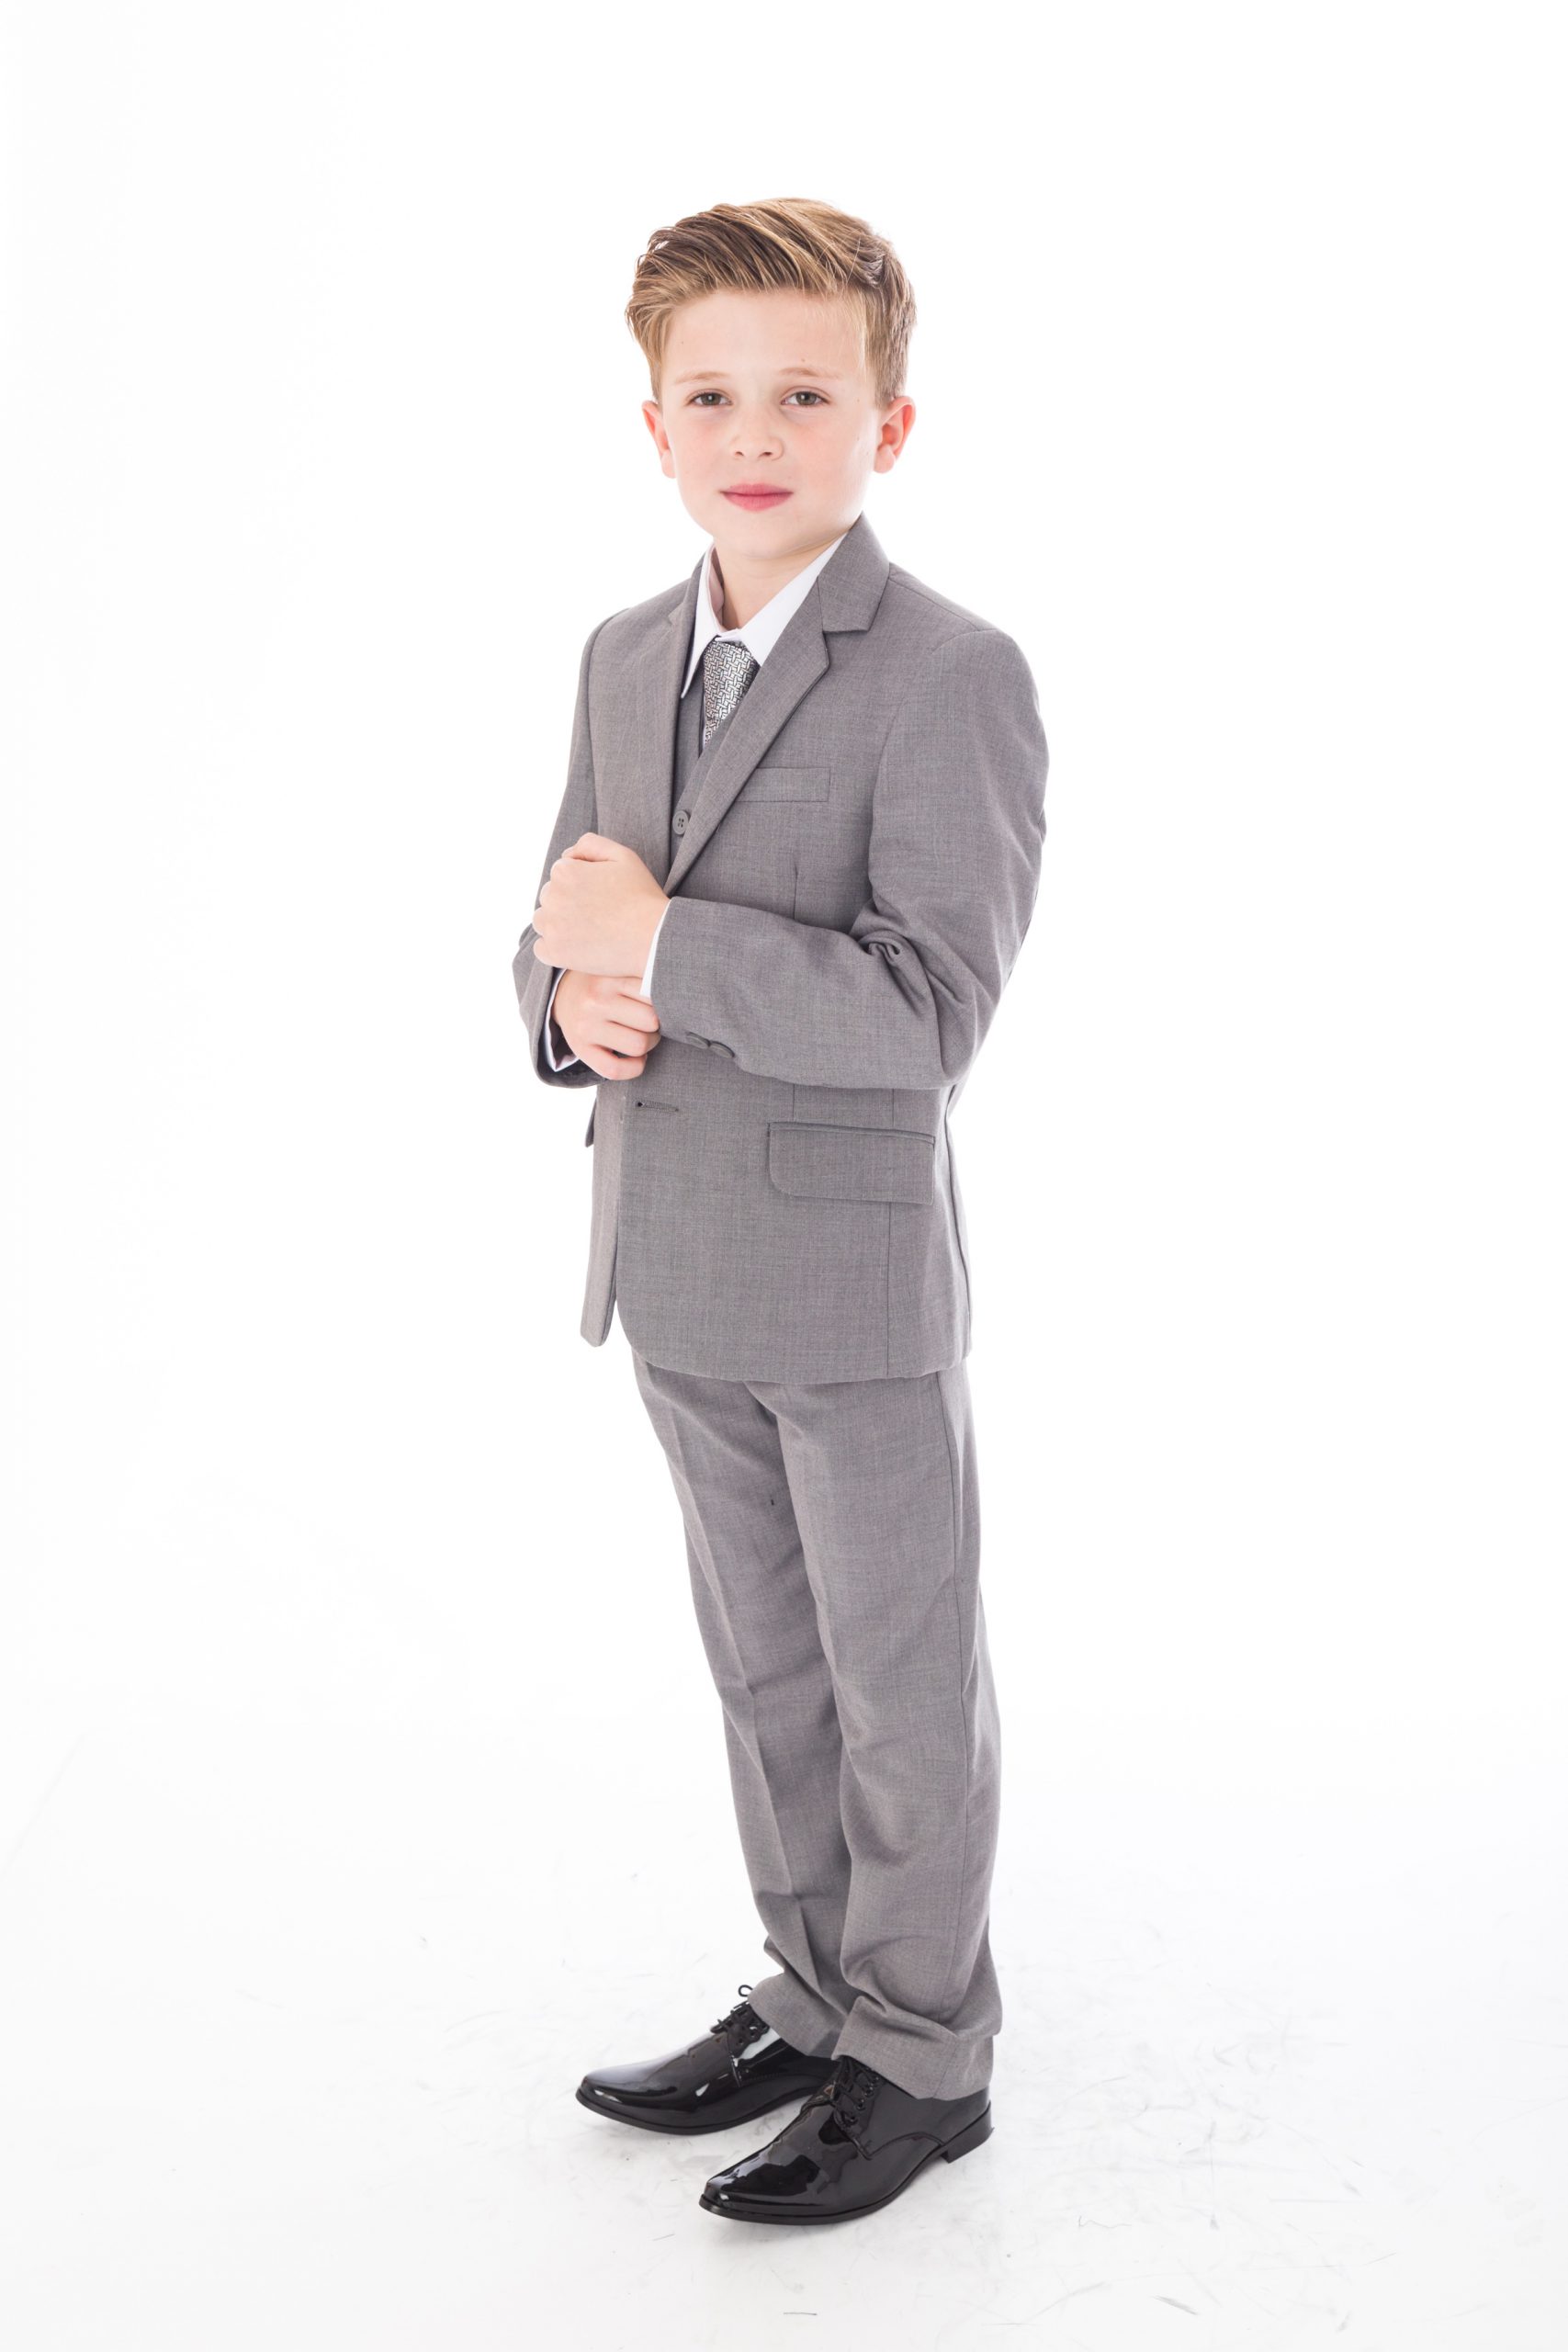 Vivaki Boys Light Grey Suit Formal Wedding Pageboy Party Prom 5pc Suit